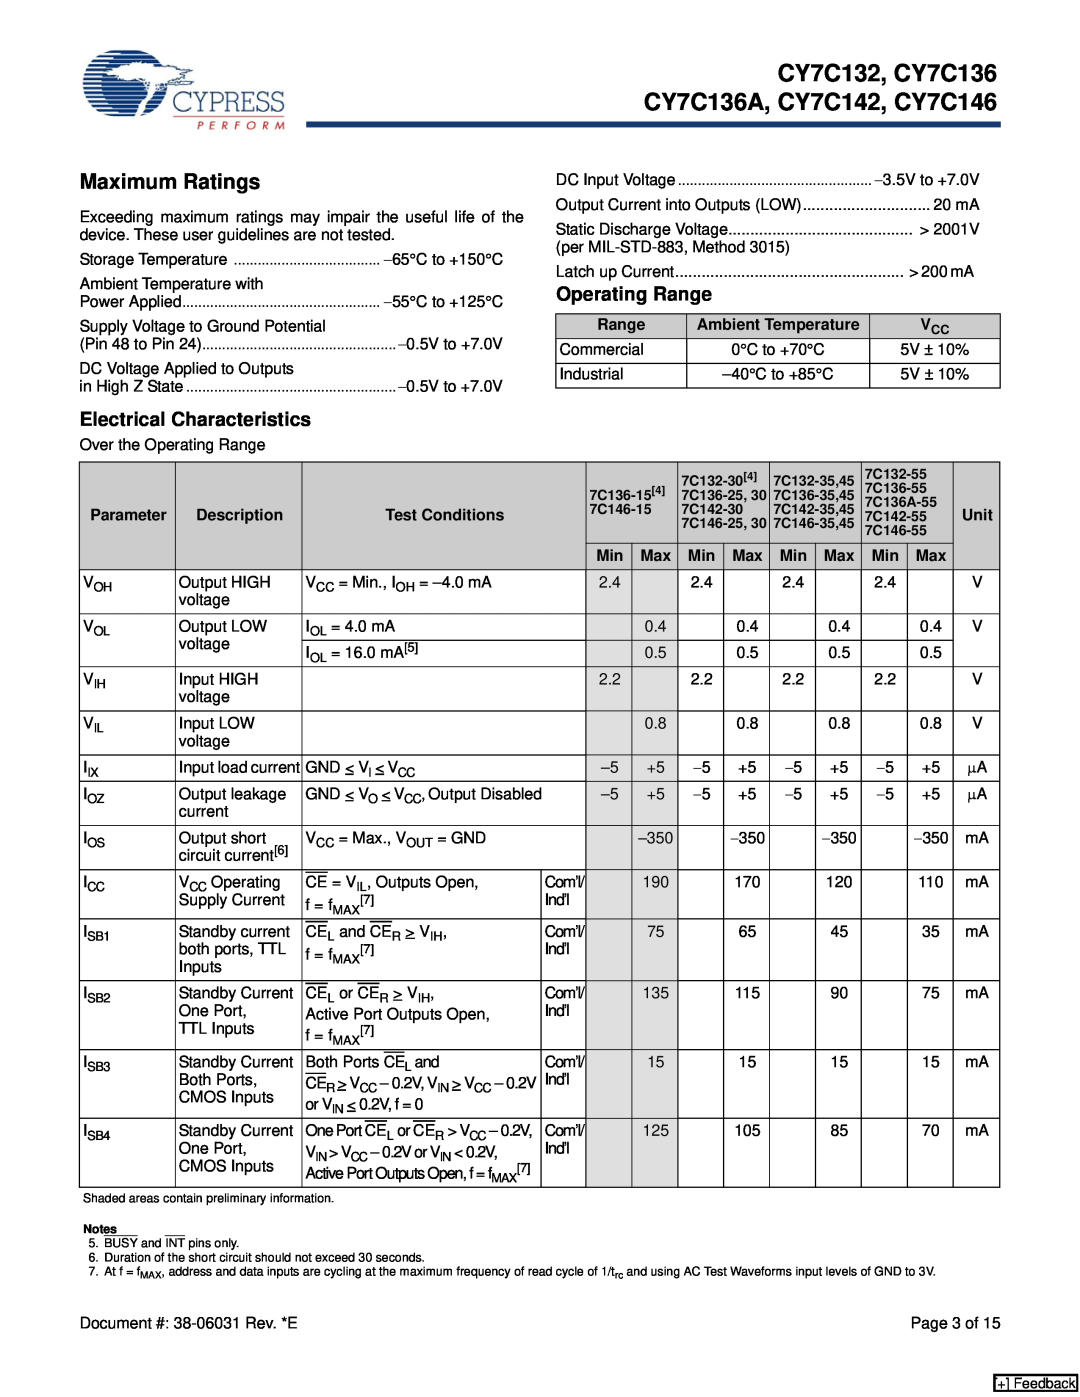 Cypress manual Maximum Ratings, Operating Range, Electrical Characteristics, CY7C132, CY7C136 CY7C136A, CY7C142, CY7C146 